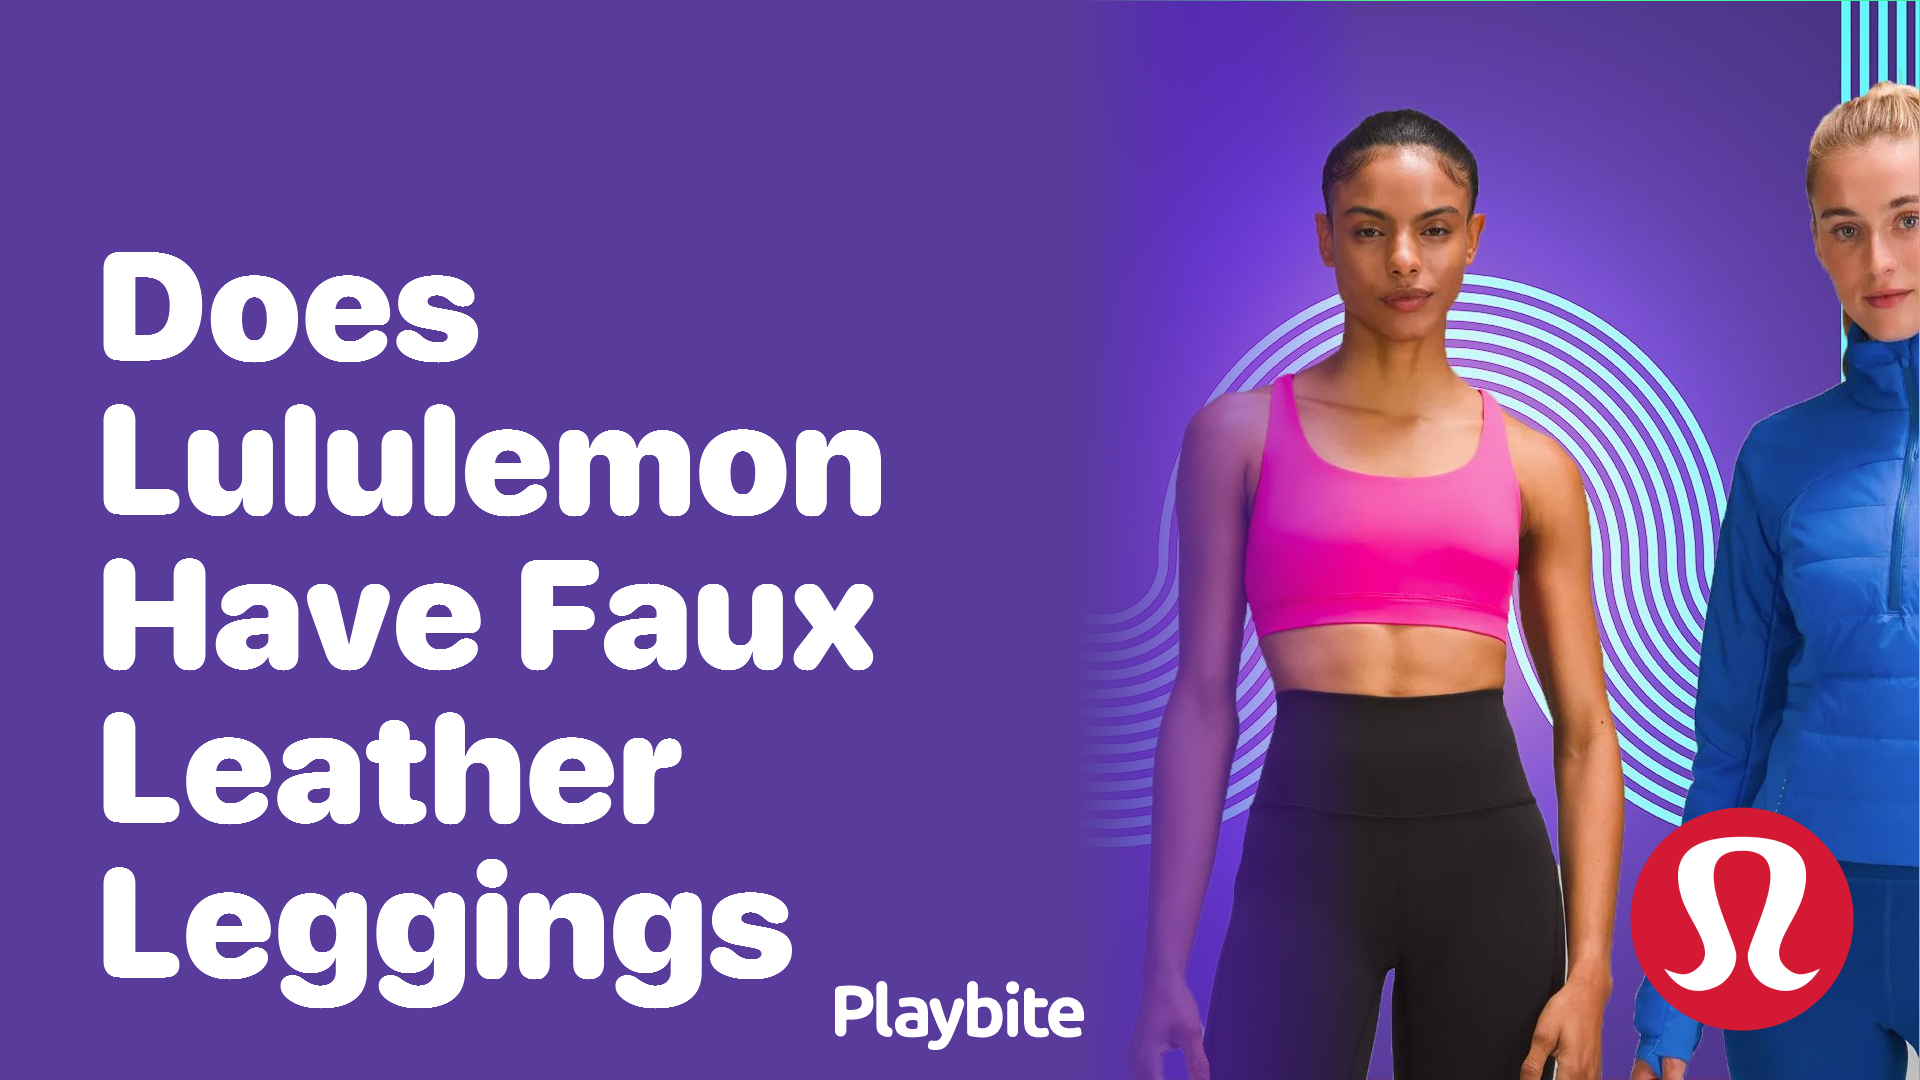 Does Lululemon Have Faux Leather Leggings? - Playbite